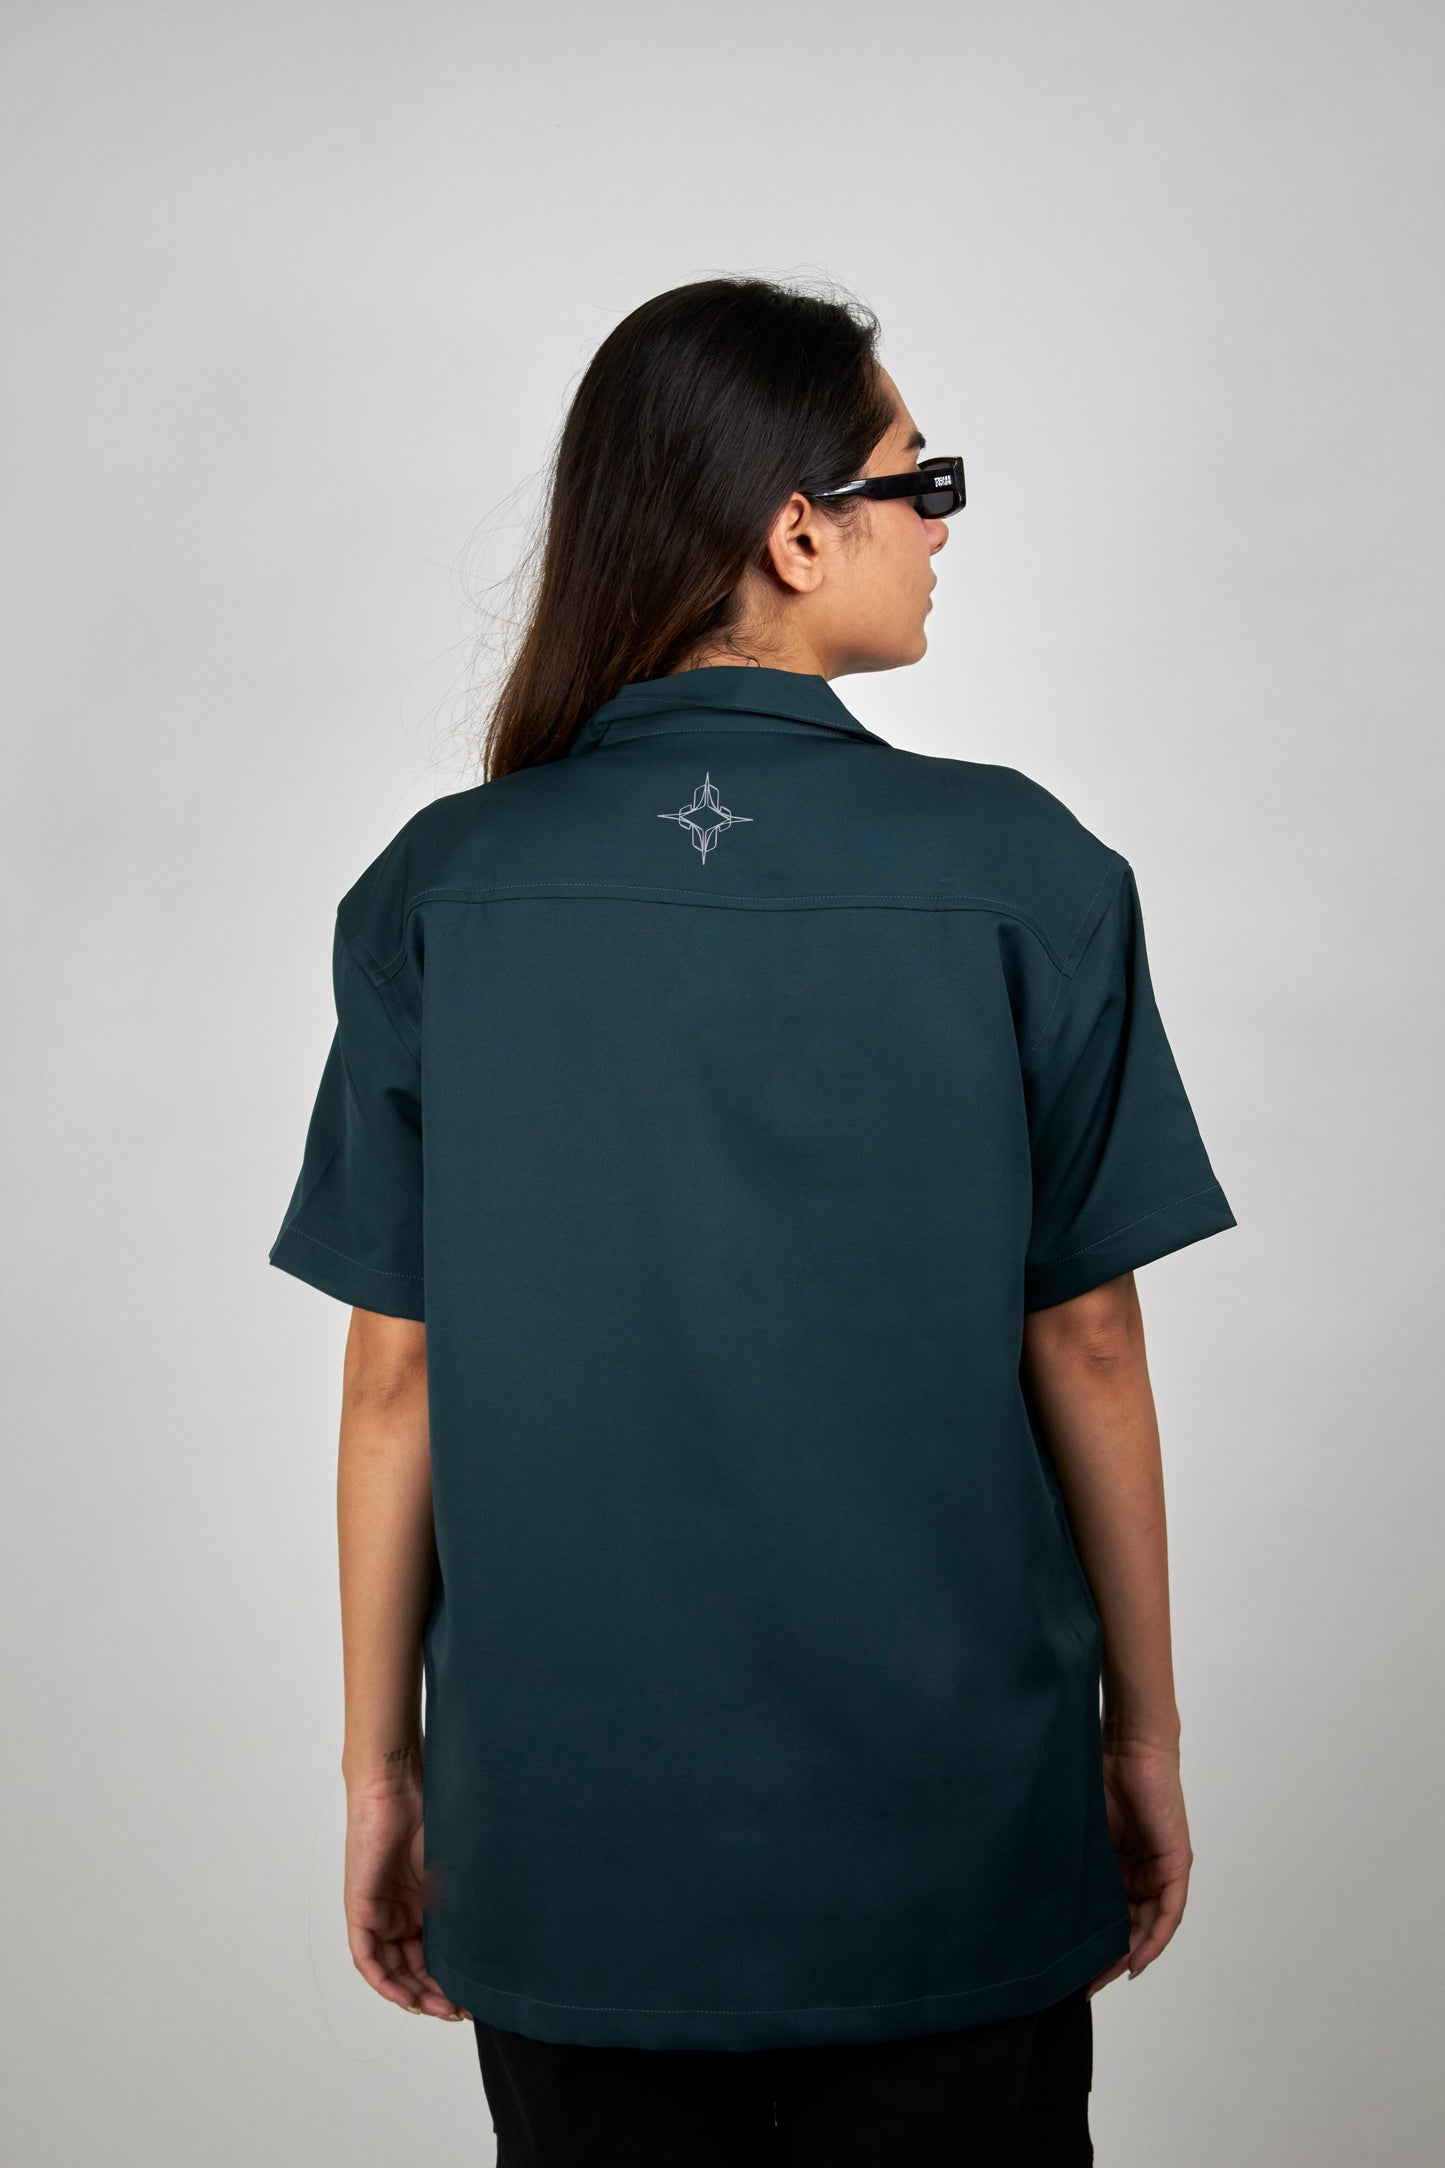 OFFSET SHIRT/ Caribbean green (Summer shirts) by Ripoff